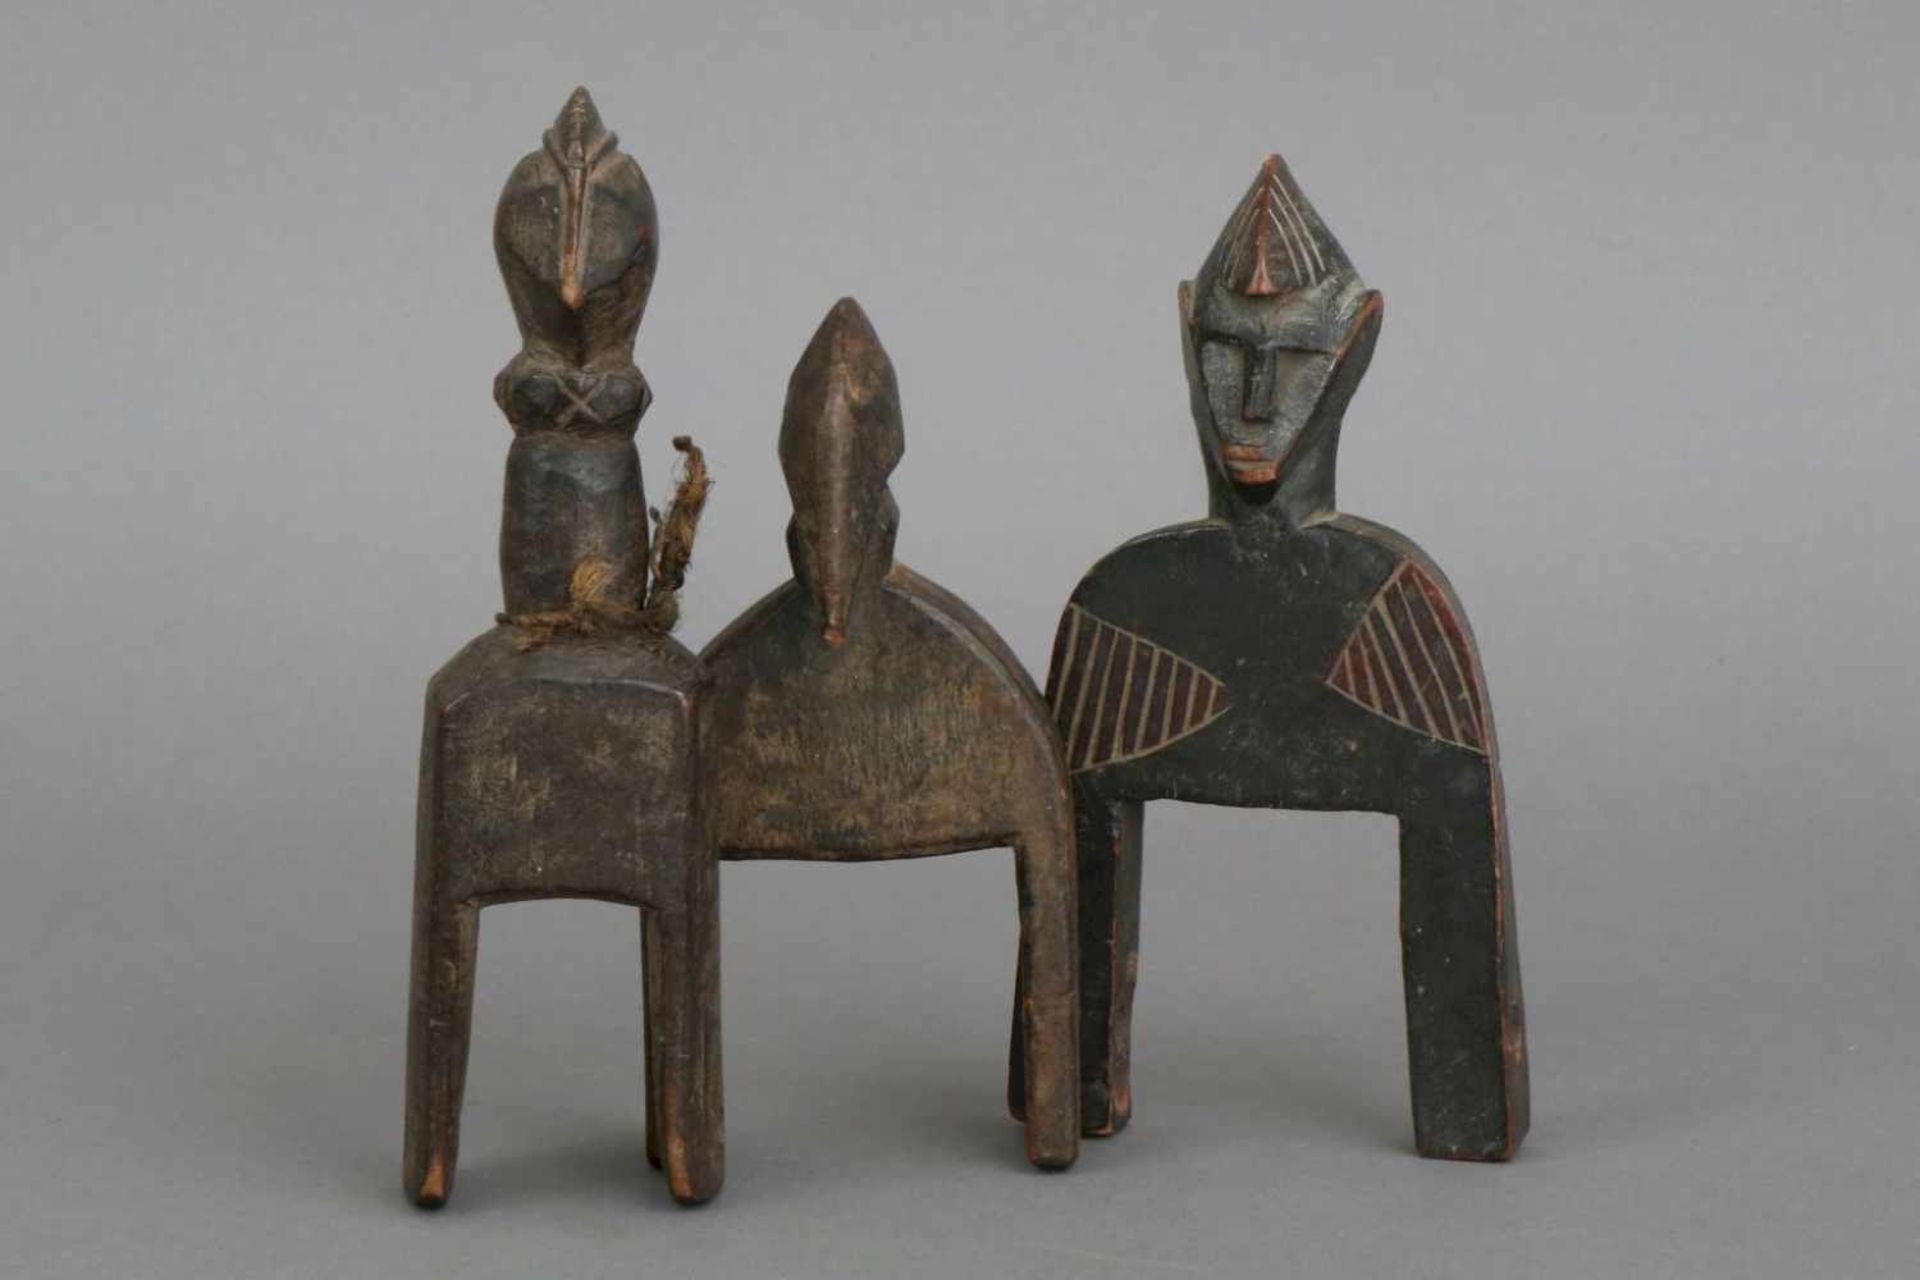 3 afrikanische Webrollen-Halterwohl 19. Jahrhundert, Holz, geschnitzt, dunkel patiniert, diverse,